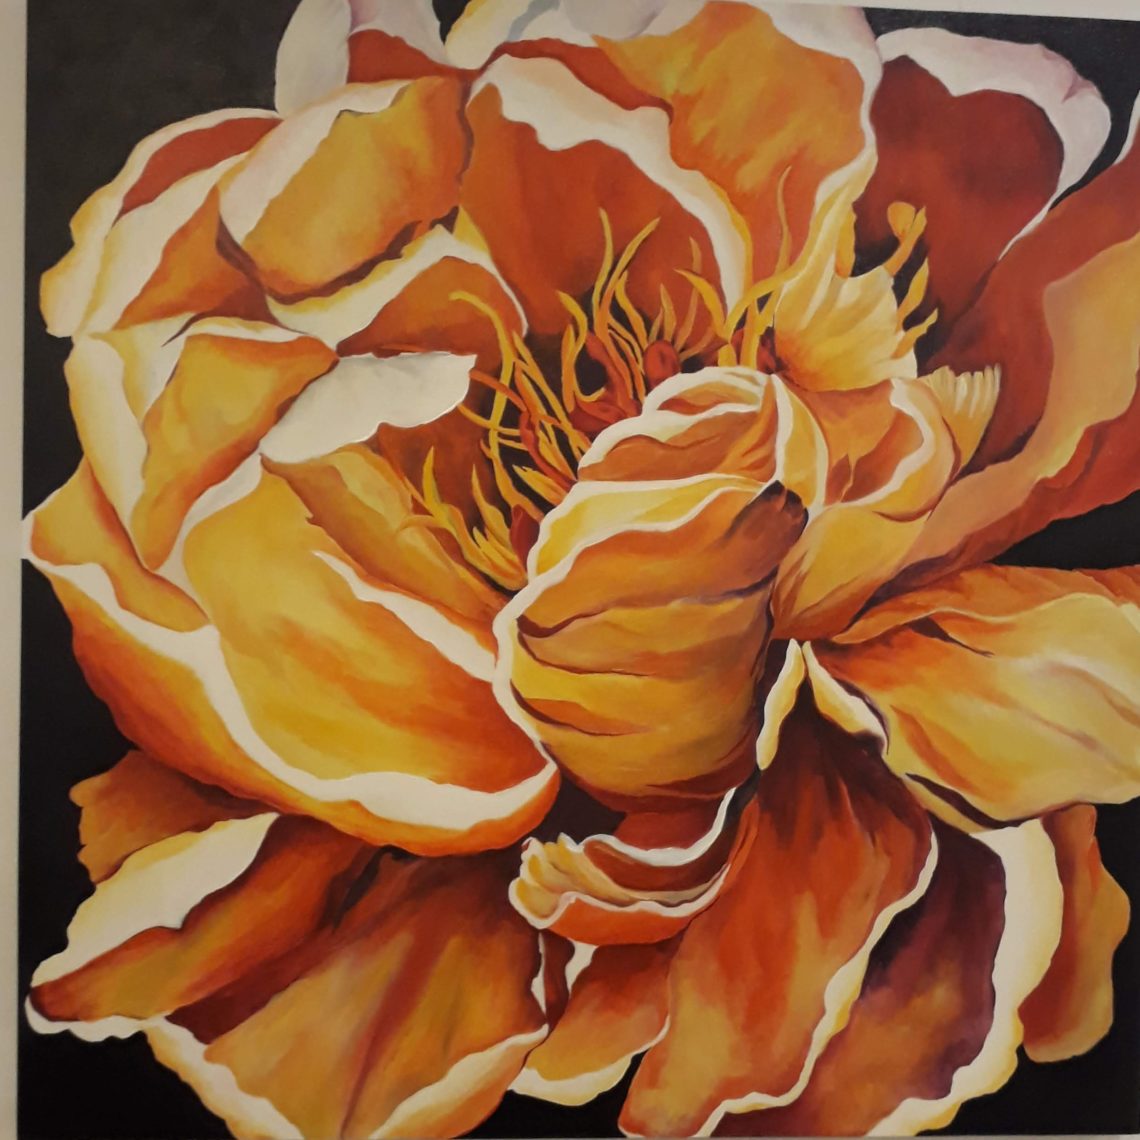 tela pintada com uma flor chamada peonia laranja em estilo moderno canvas painted with an orange peony flower in a modern style